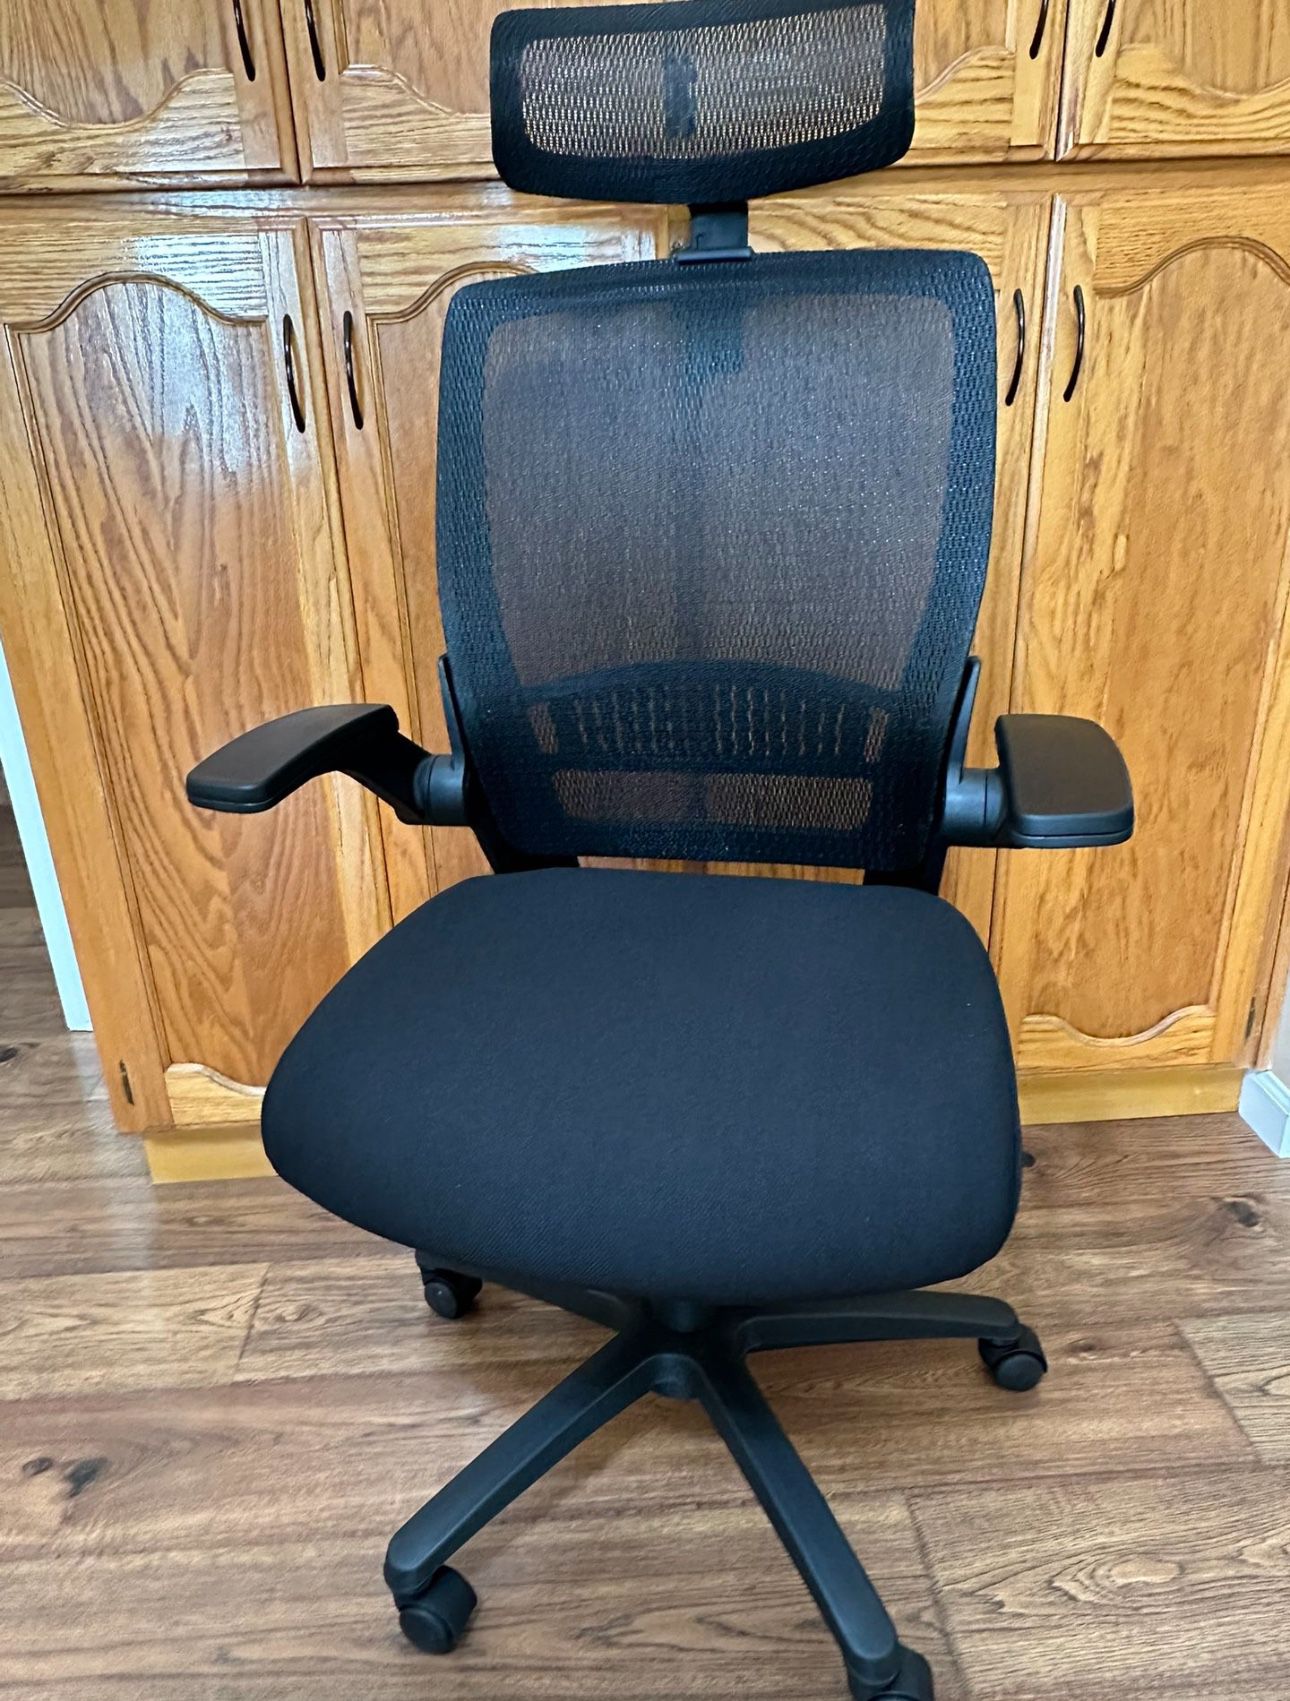 Ergonomic Office Chair Home Desk Chair, New